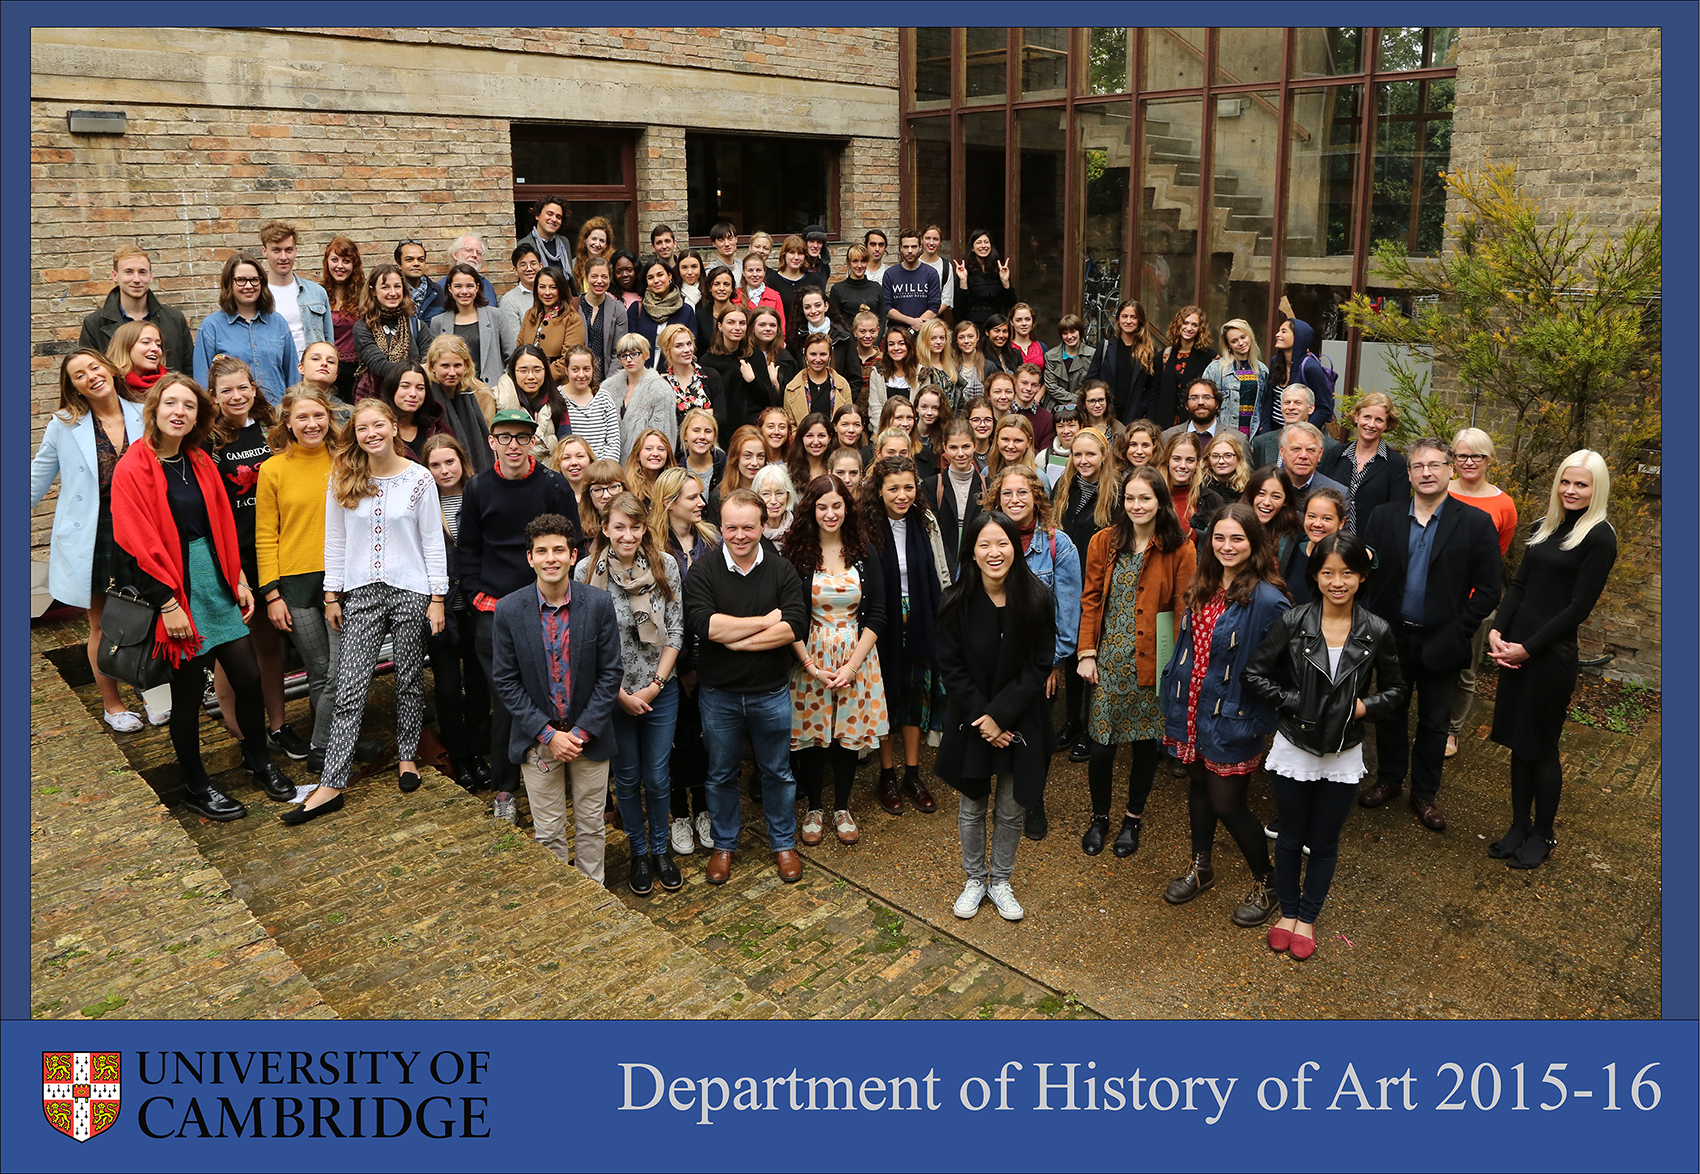 History of Art Department photo 2015-16